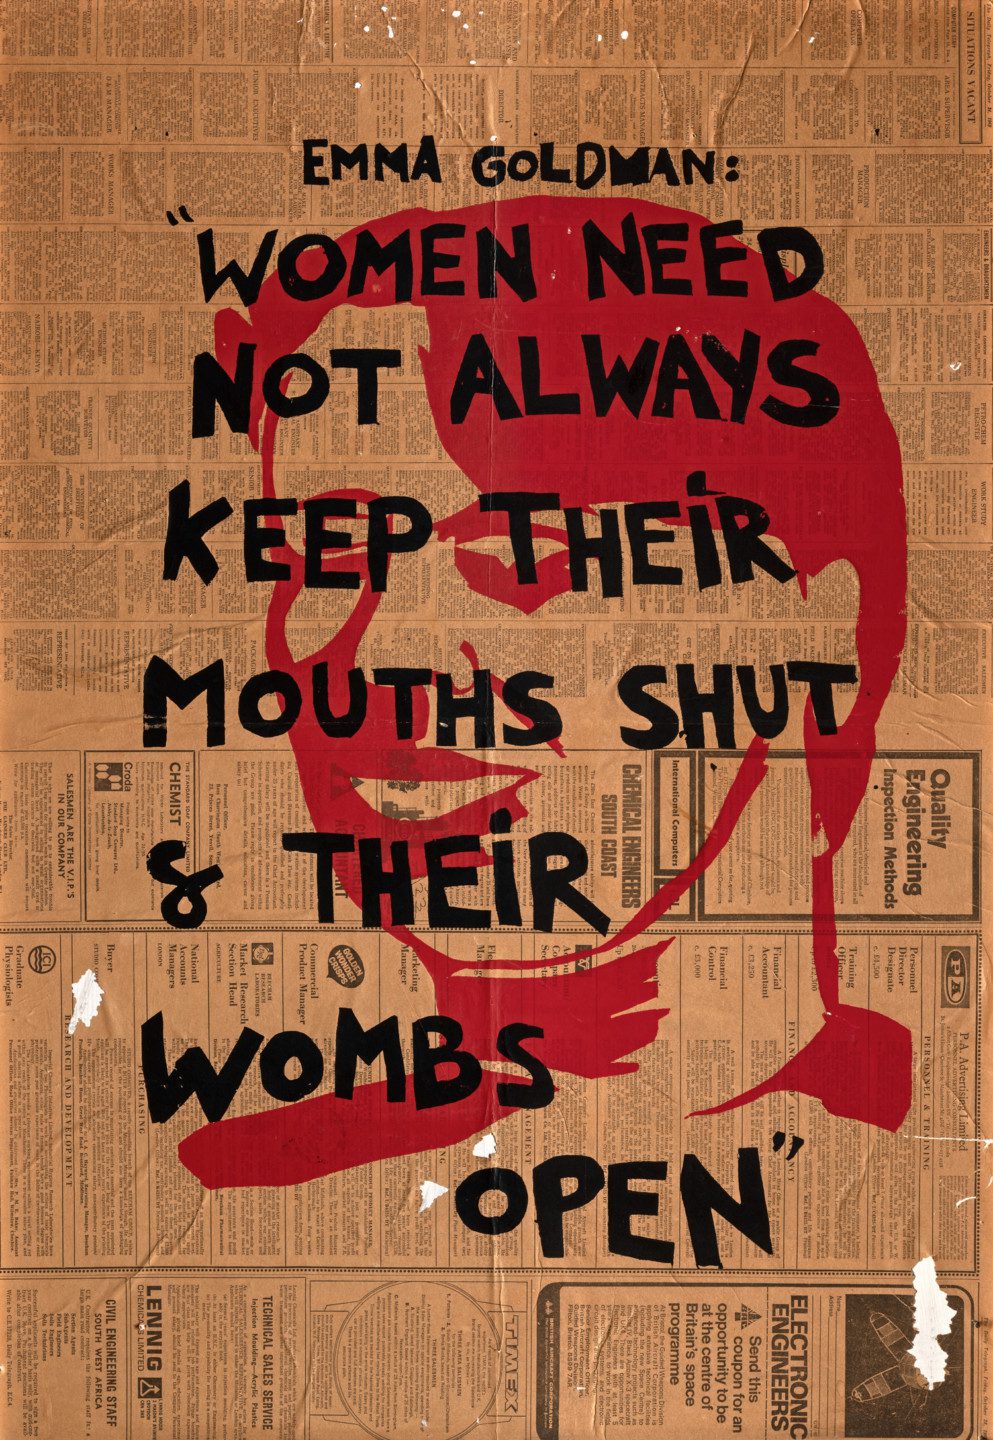  Poster by Monica Sjö with Emma Goldman's text: Women Need Not Always Keep Their Mouths Shut & Their Wombs Open